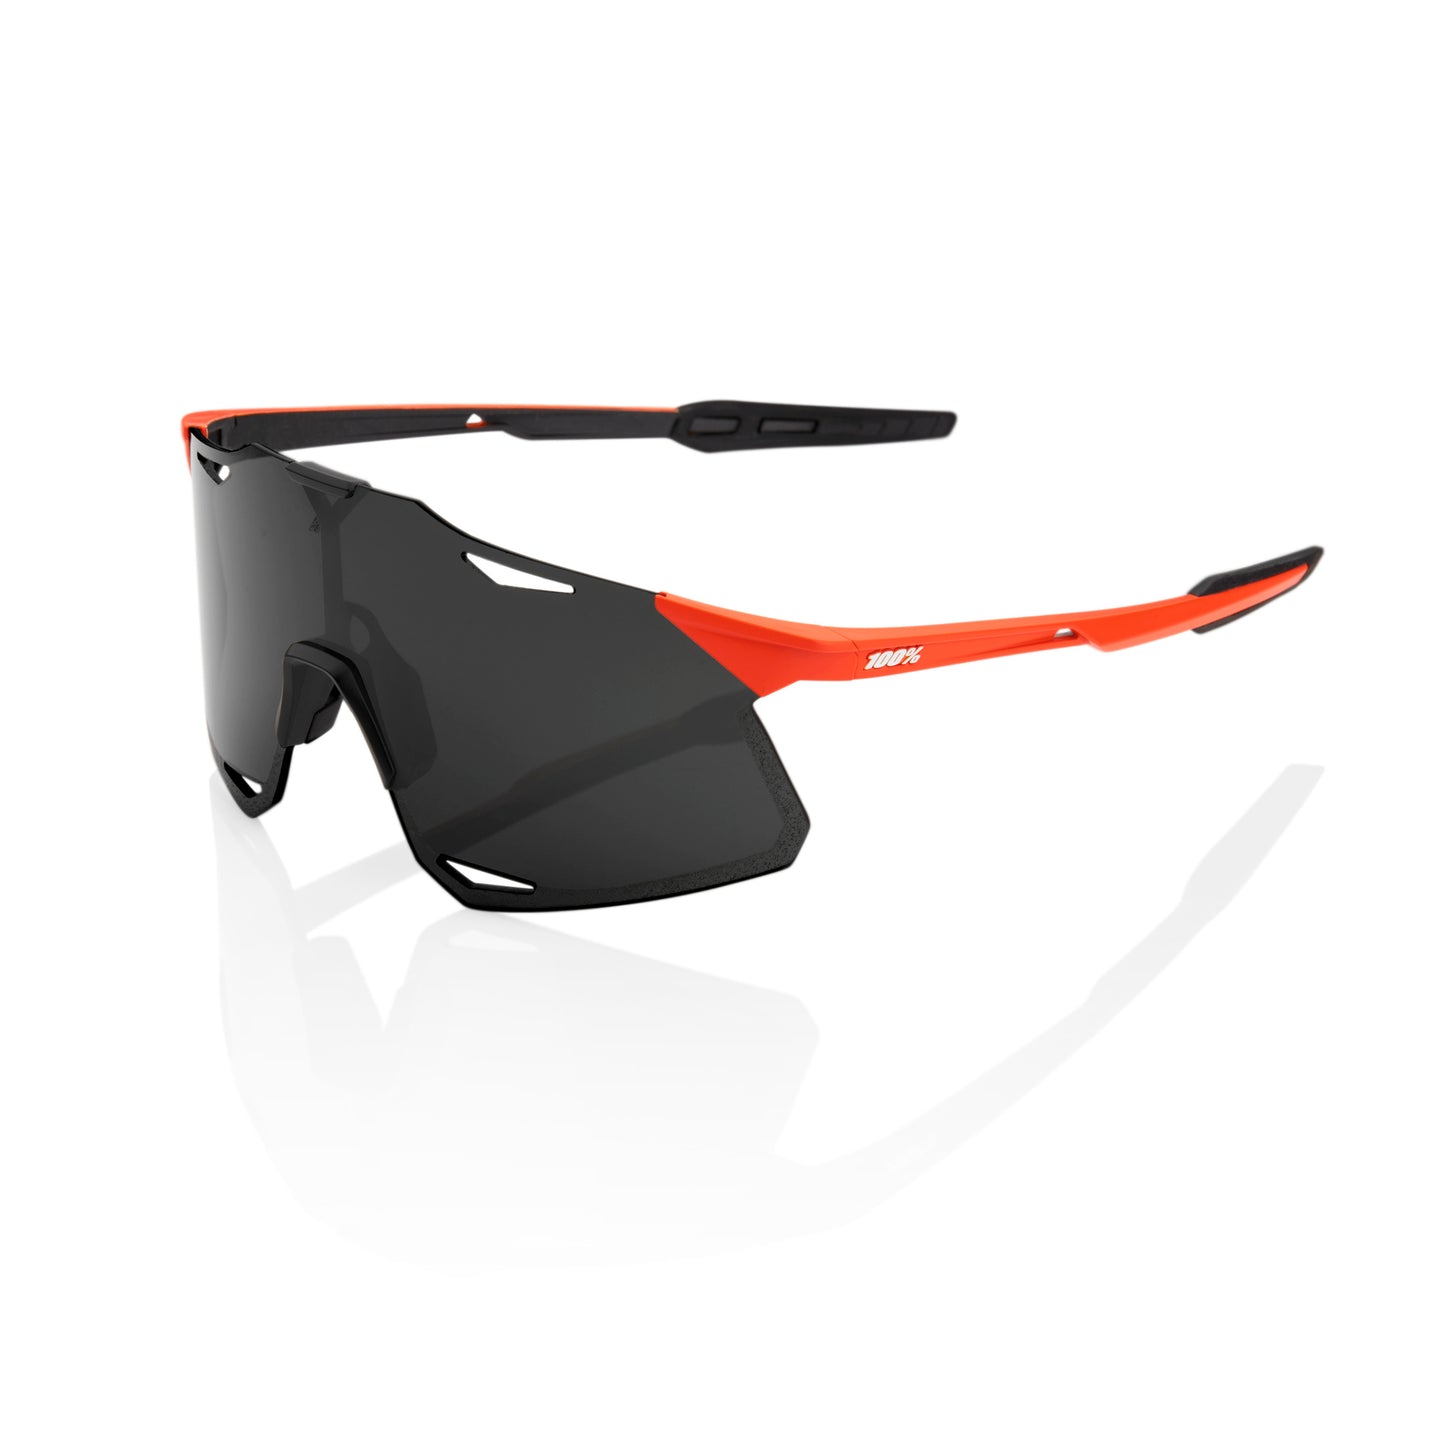 100 Percent Hypercraft Sunglasses - One Size Fits Most - Matte Oxyfire - Smoke Lens